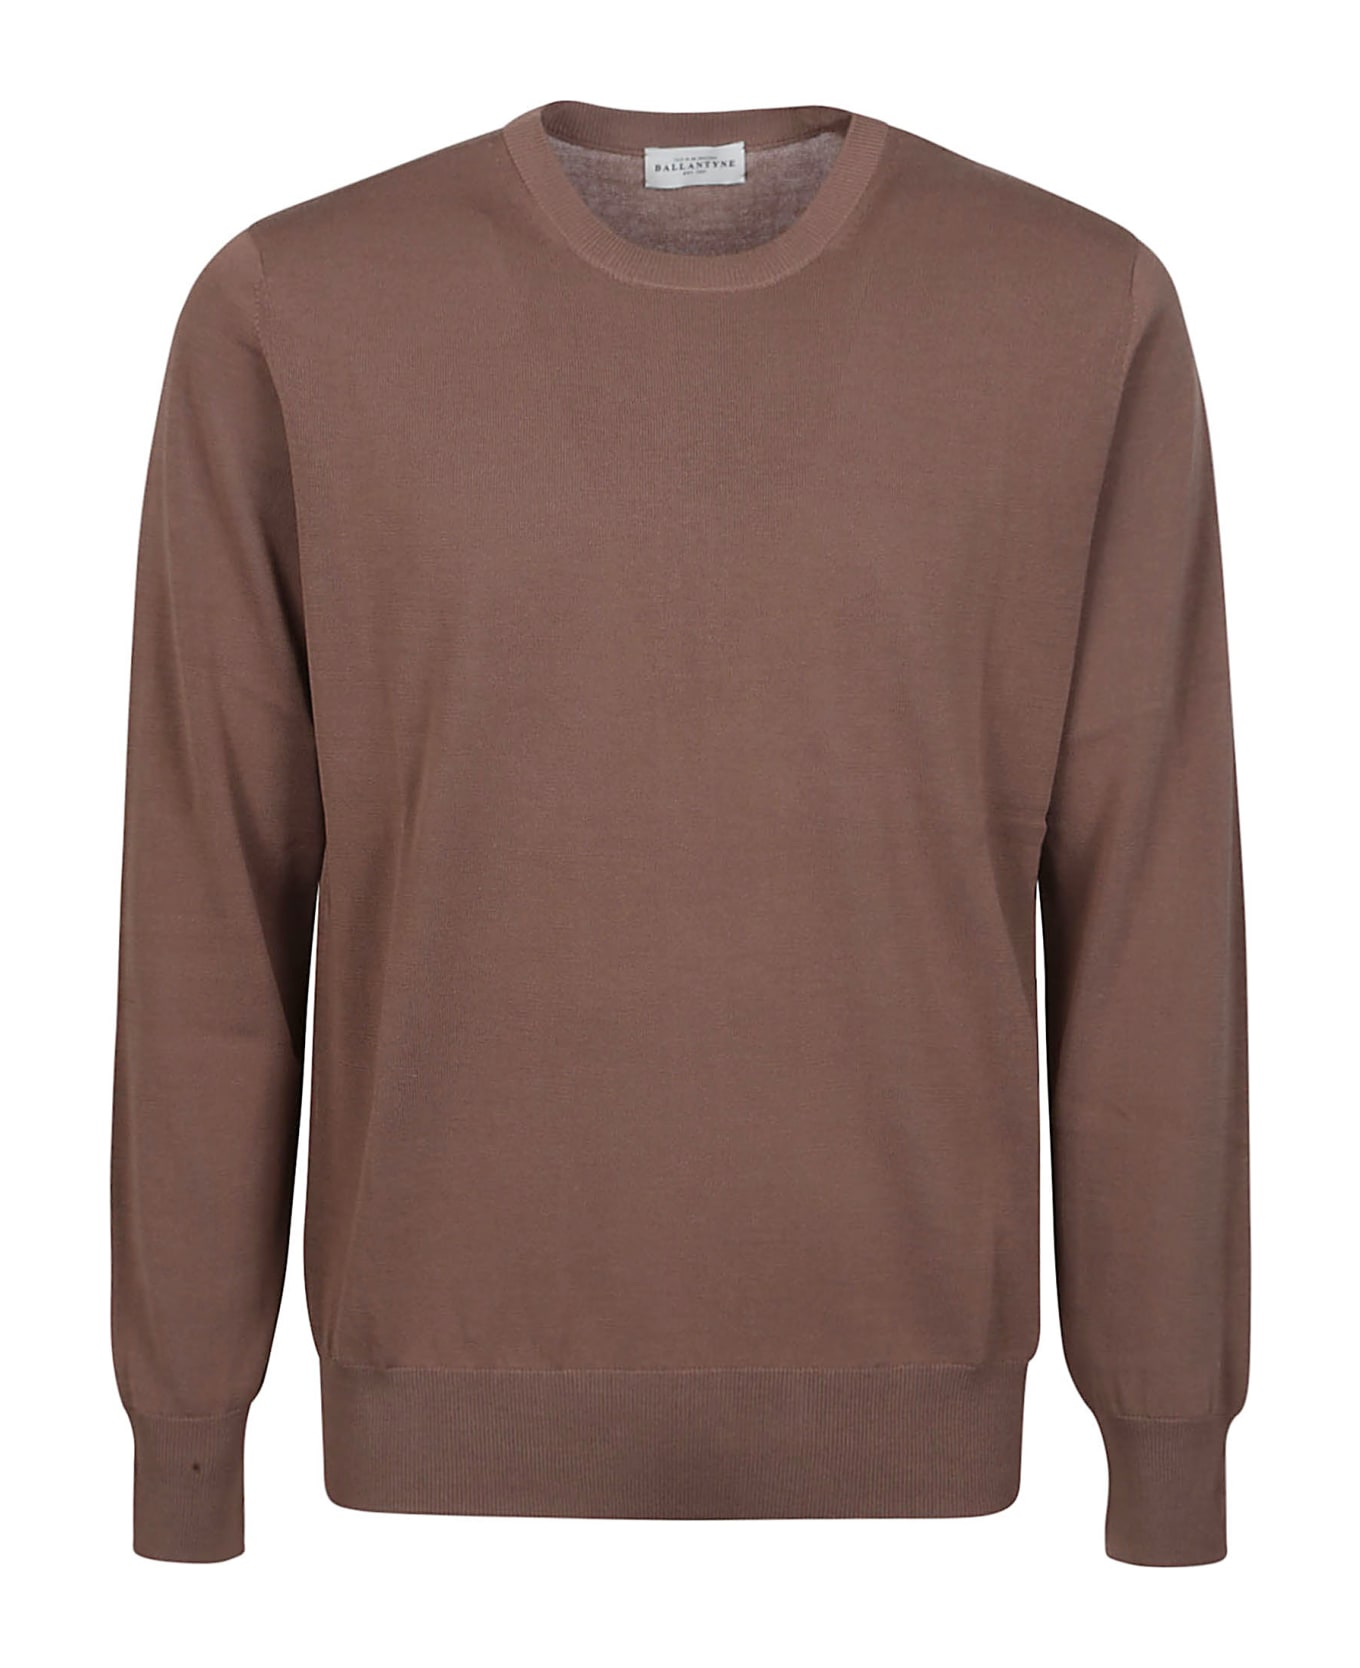 Ballantyne Plain Sweater - London Clay フリース